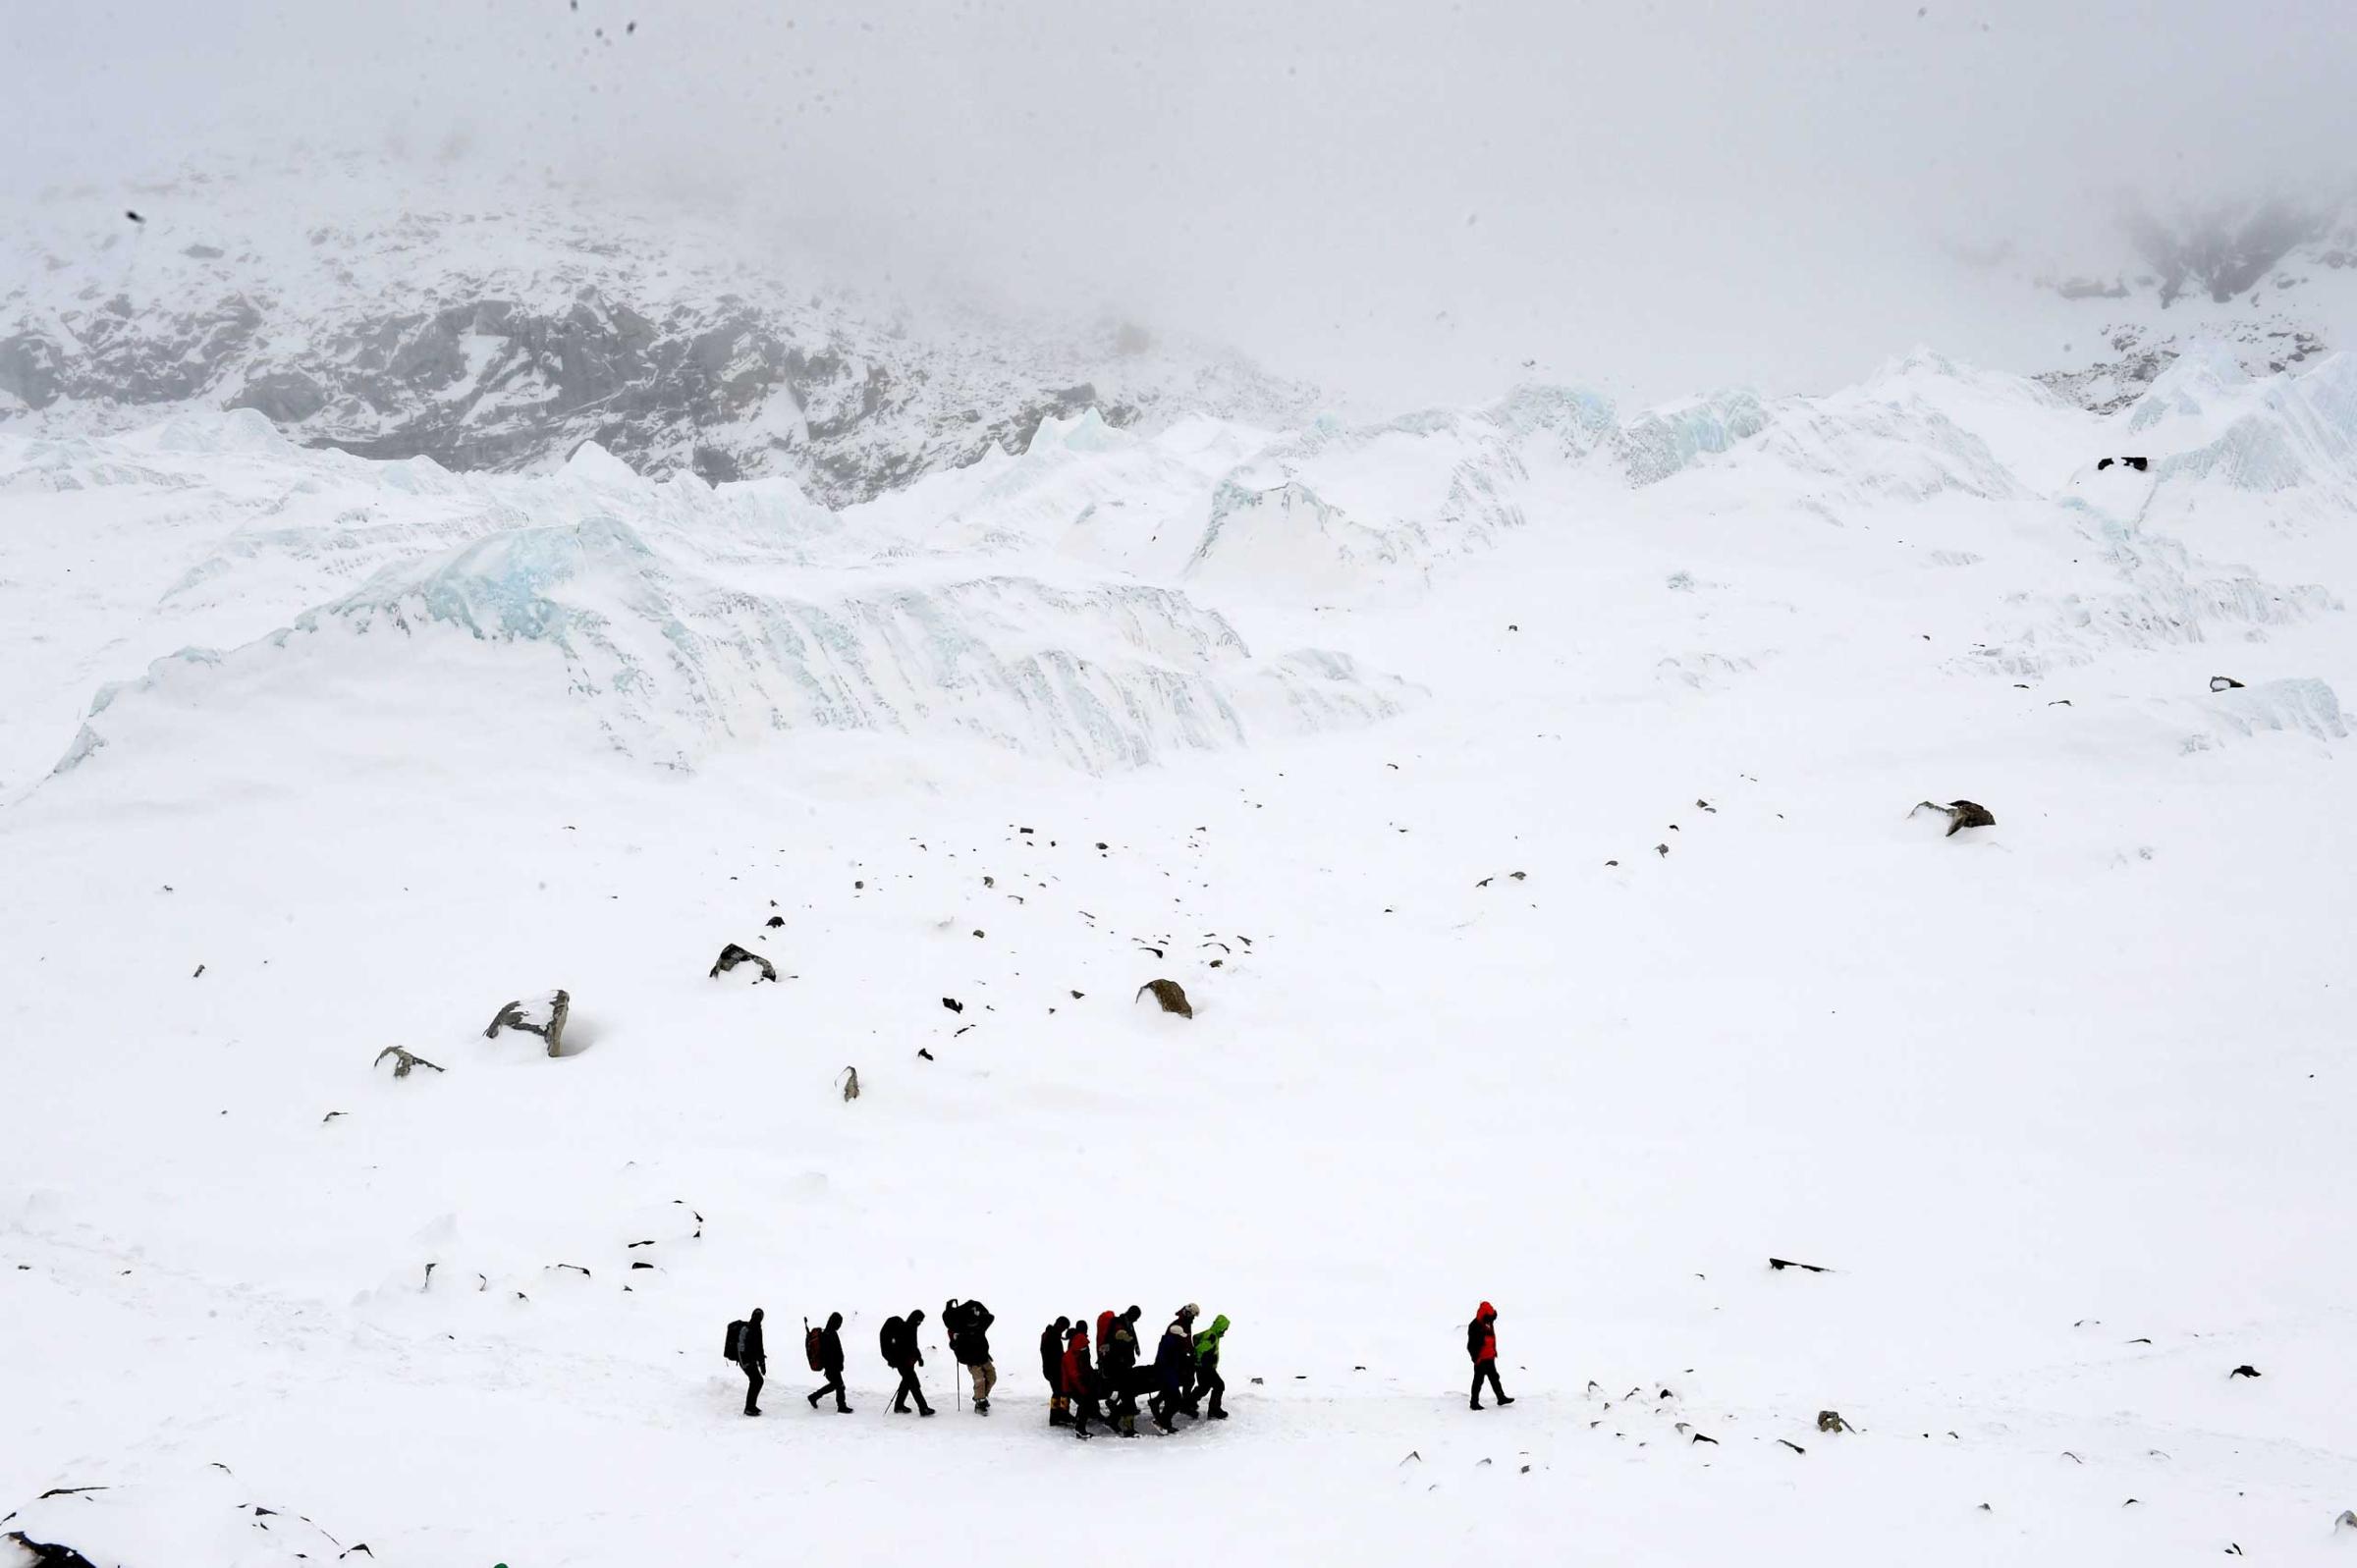 Mount Everest Avalanche Photos